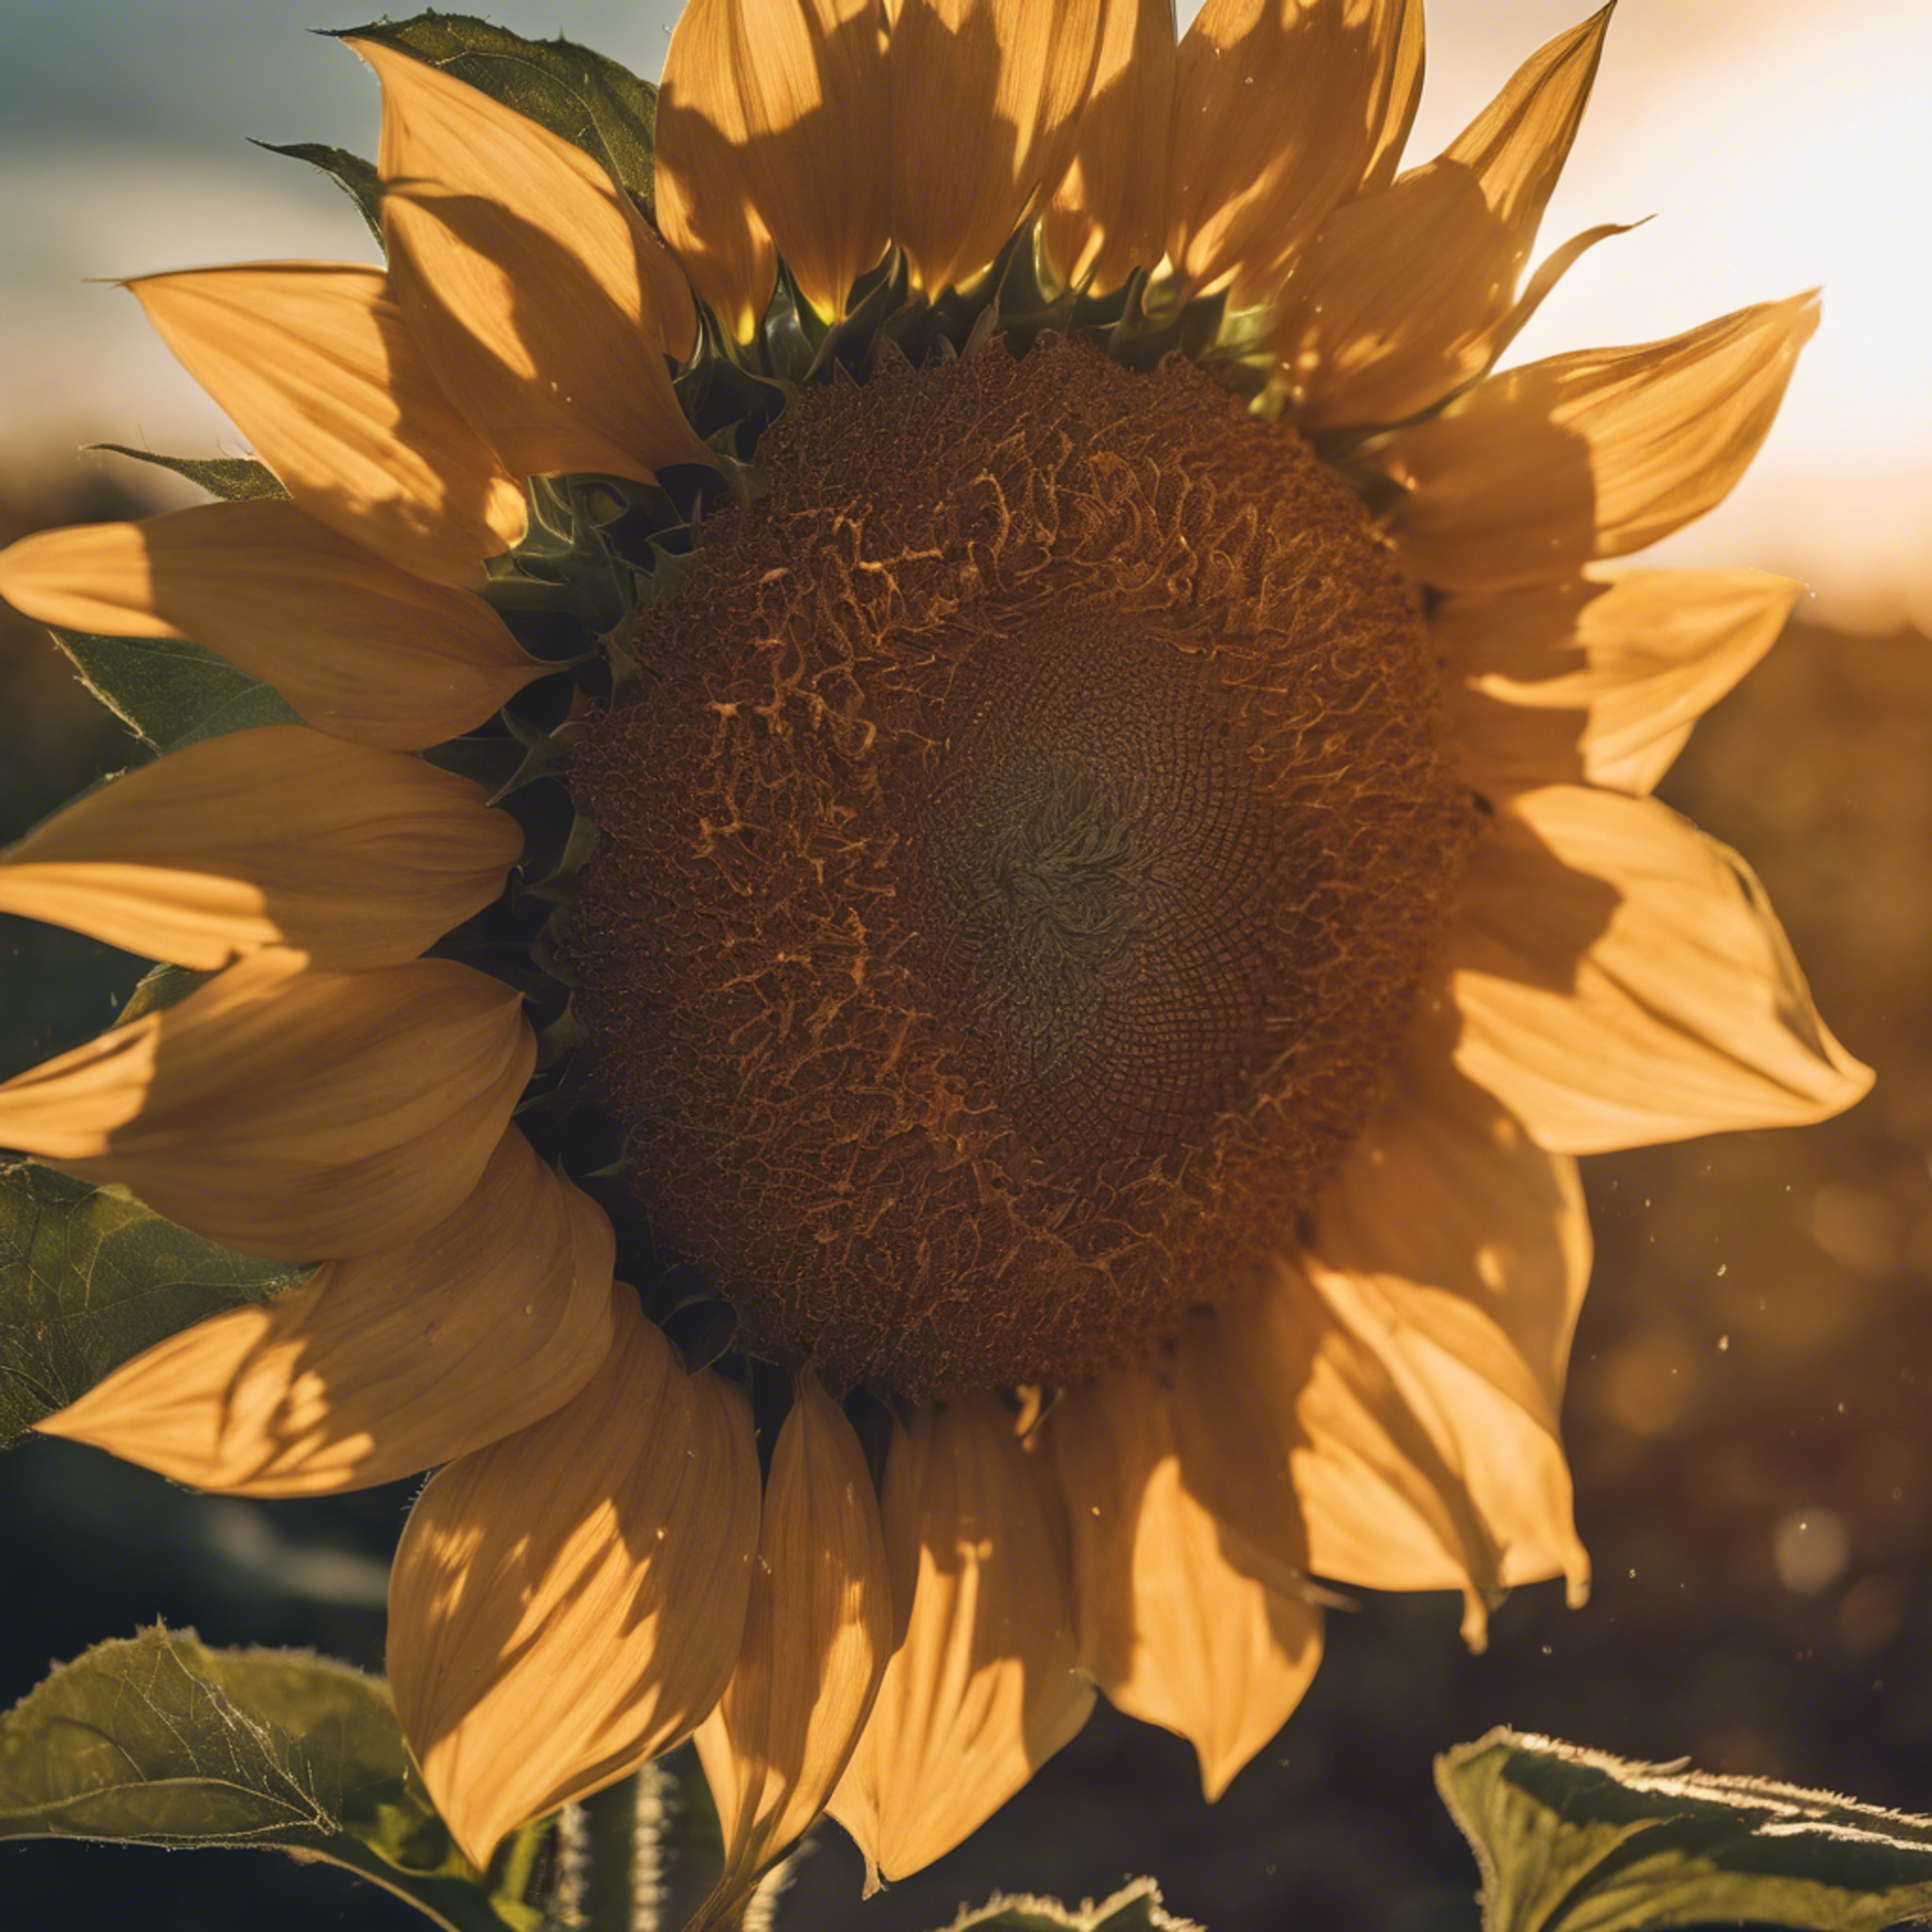 A sunflower facing the sun during a sunset. Hình nền[9b42fe1f279f4e8bae2c]